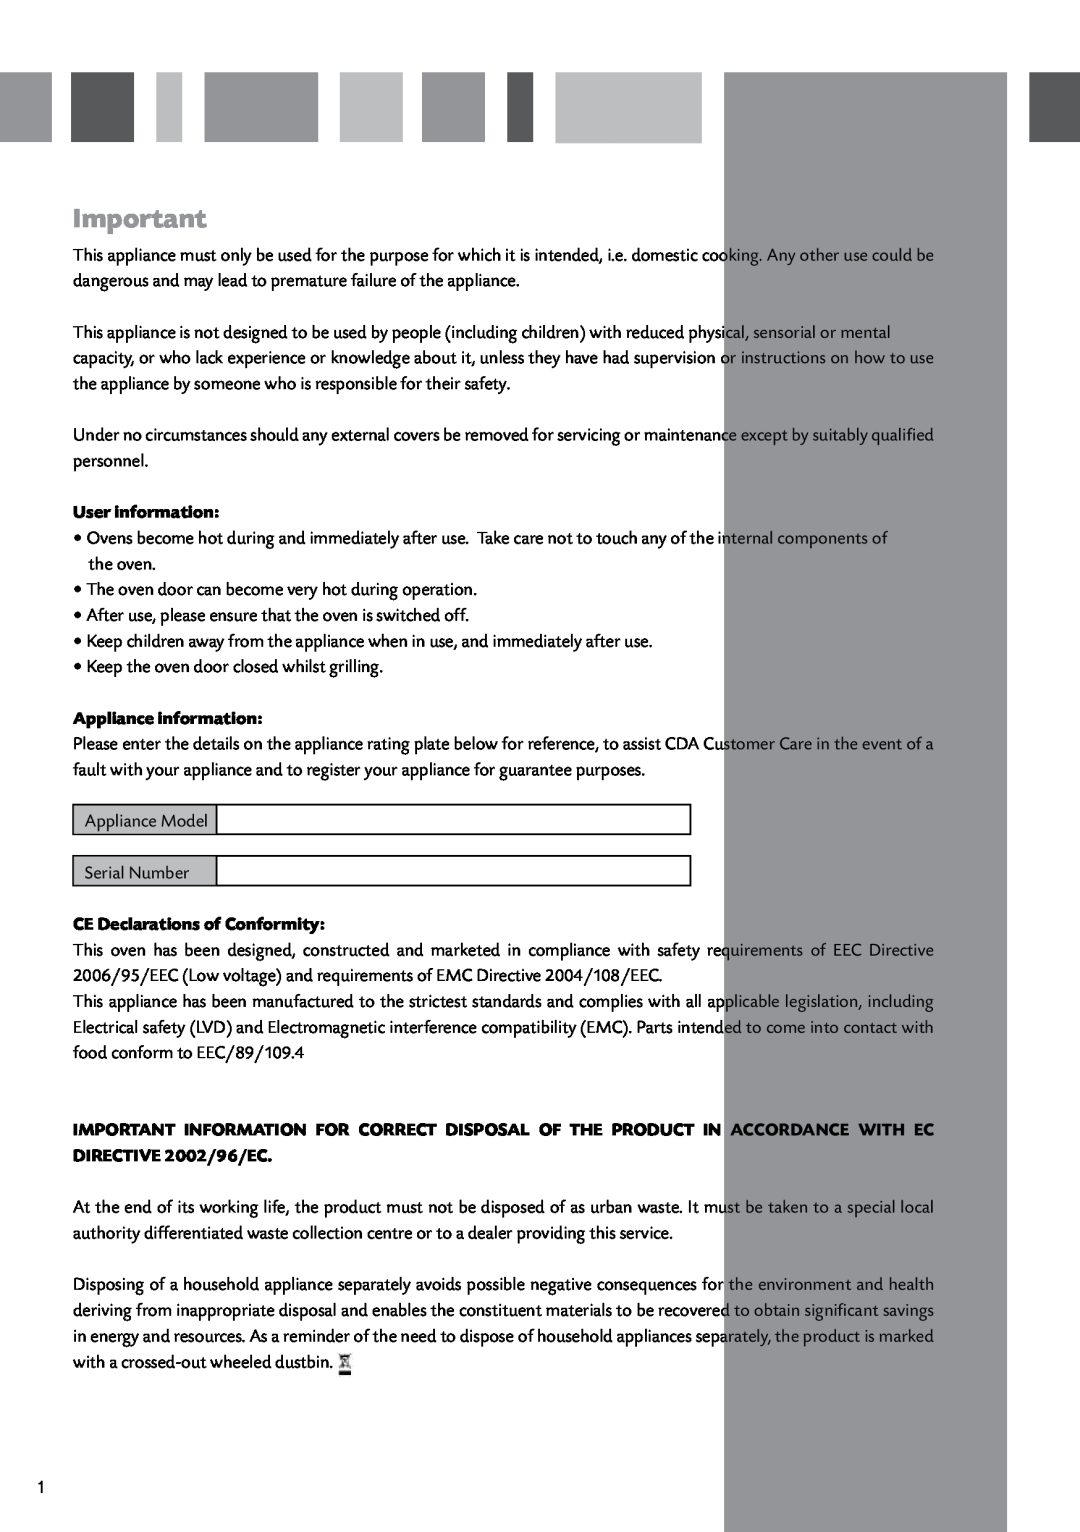 CDA SV470 manual User information, Appliance information, CE Declarations of Conformity 